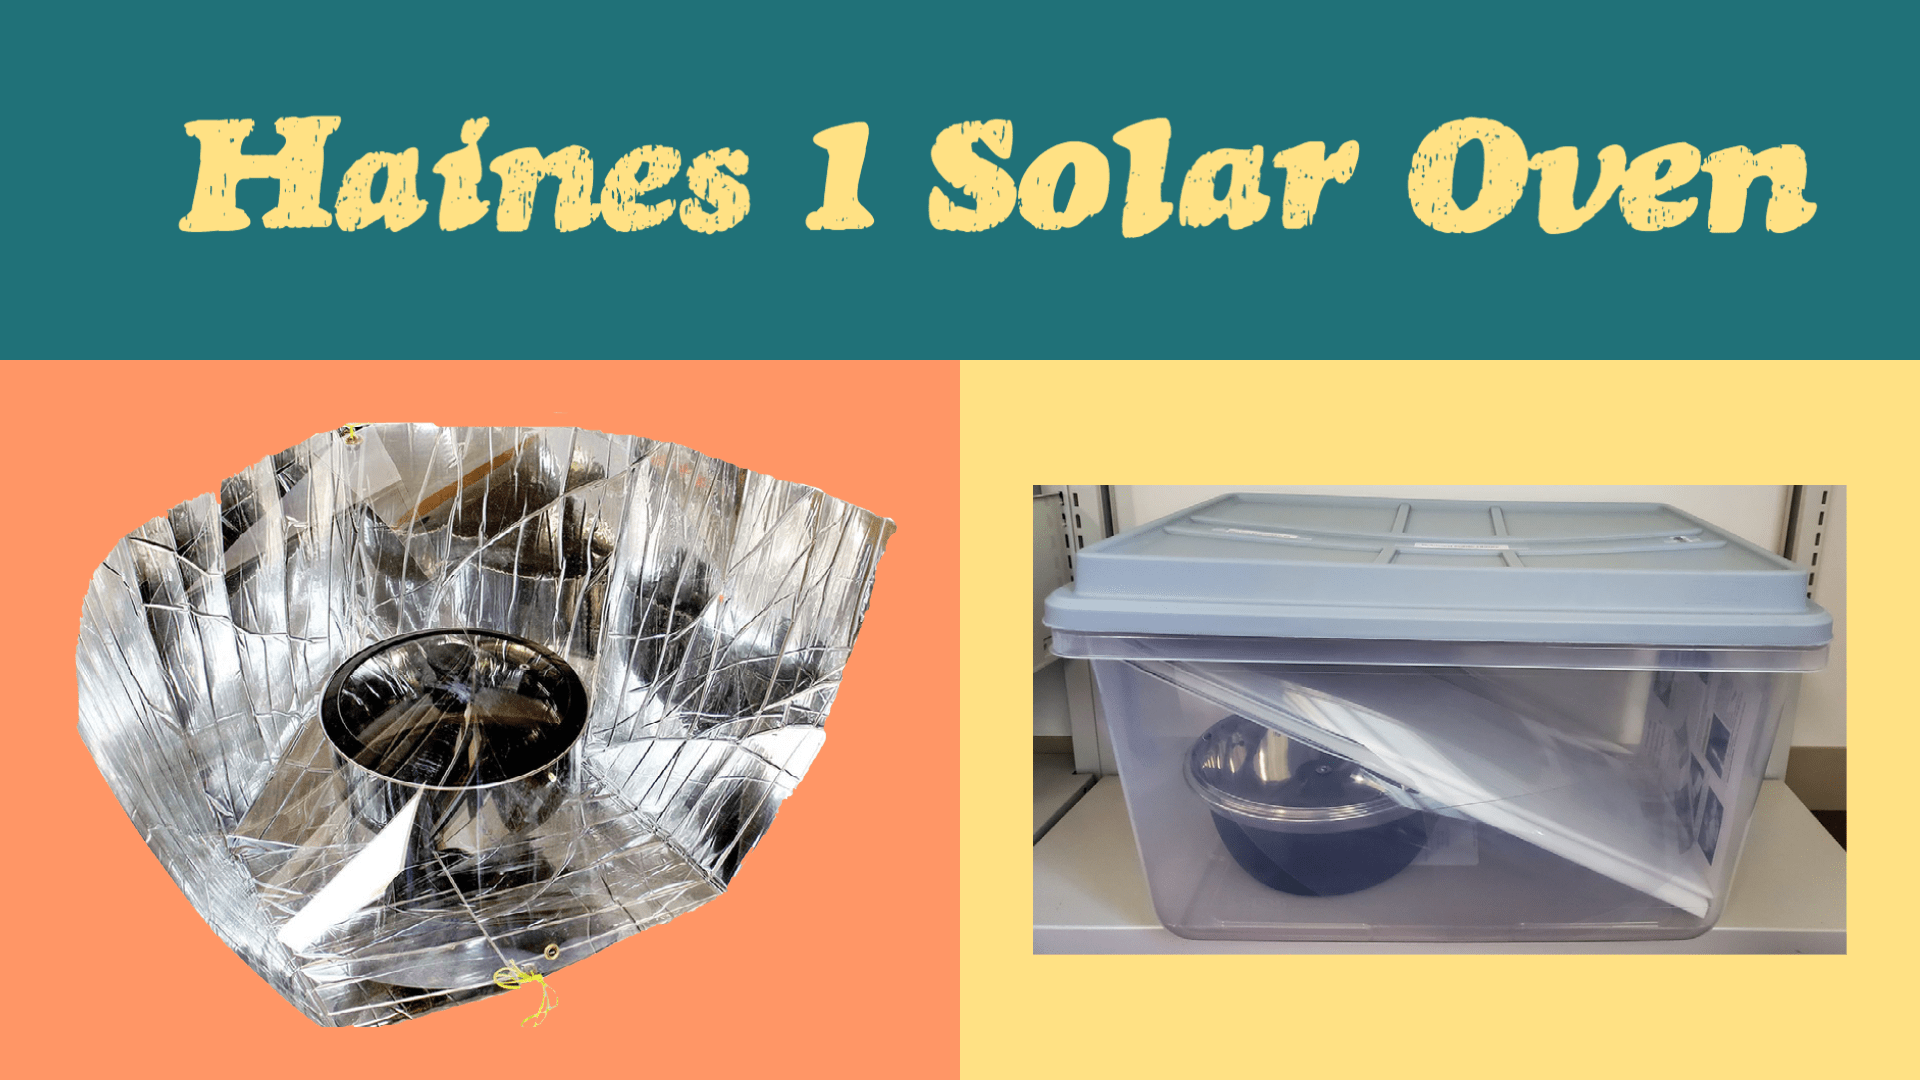 Haines solar oven